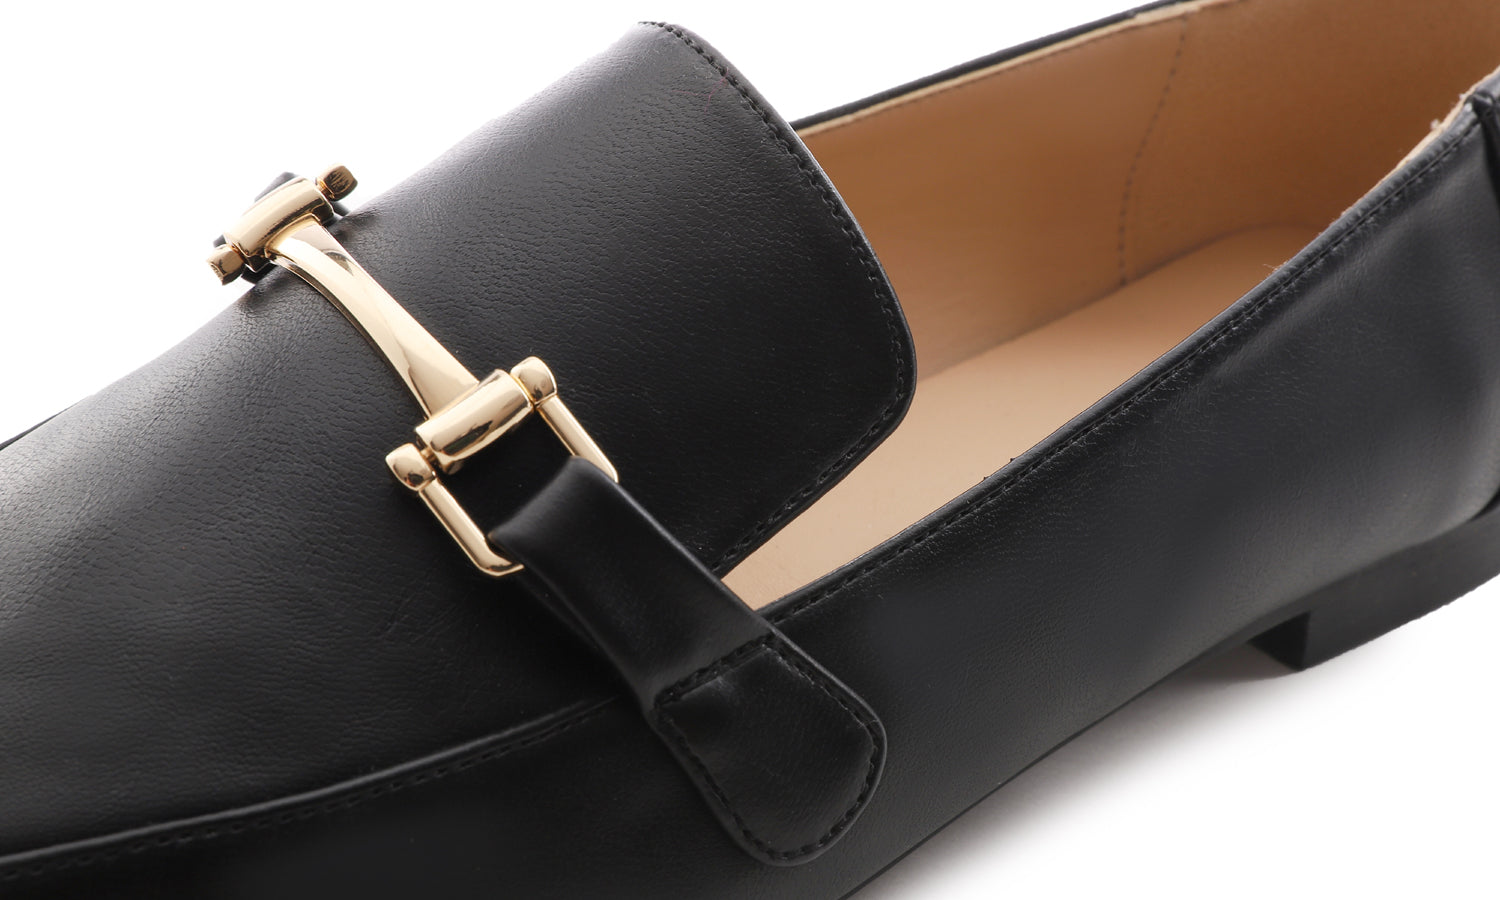 Feversole Women's Fashion Trim Deco Loafer Flats Black Plain Vegan Leather